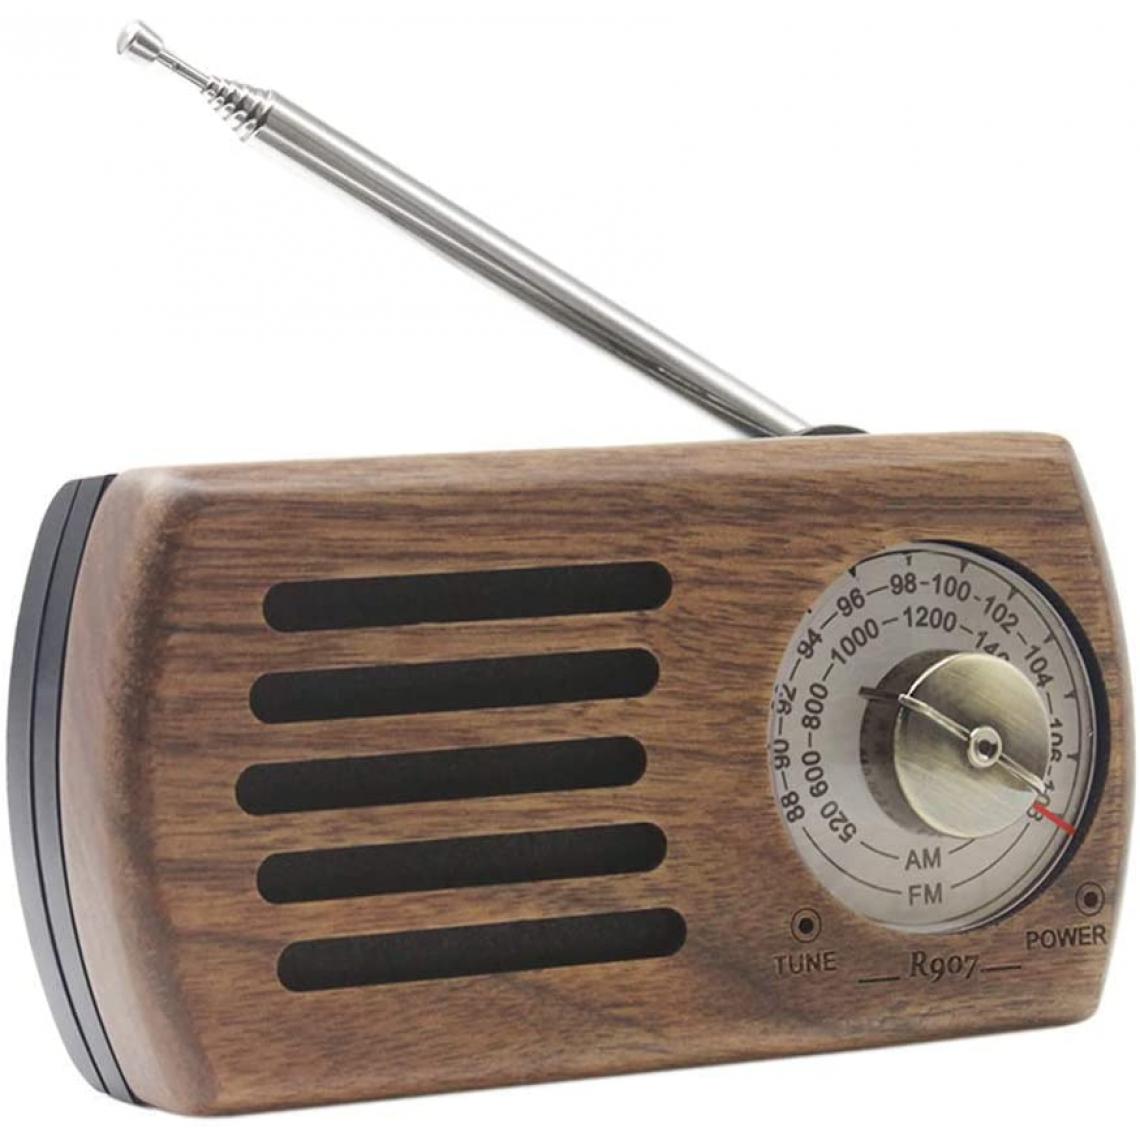 Universal - Radio FM numérique, mini radio Internet, radio FM portative, radio RADR917 +(brun) - Radio